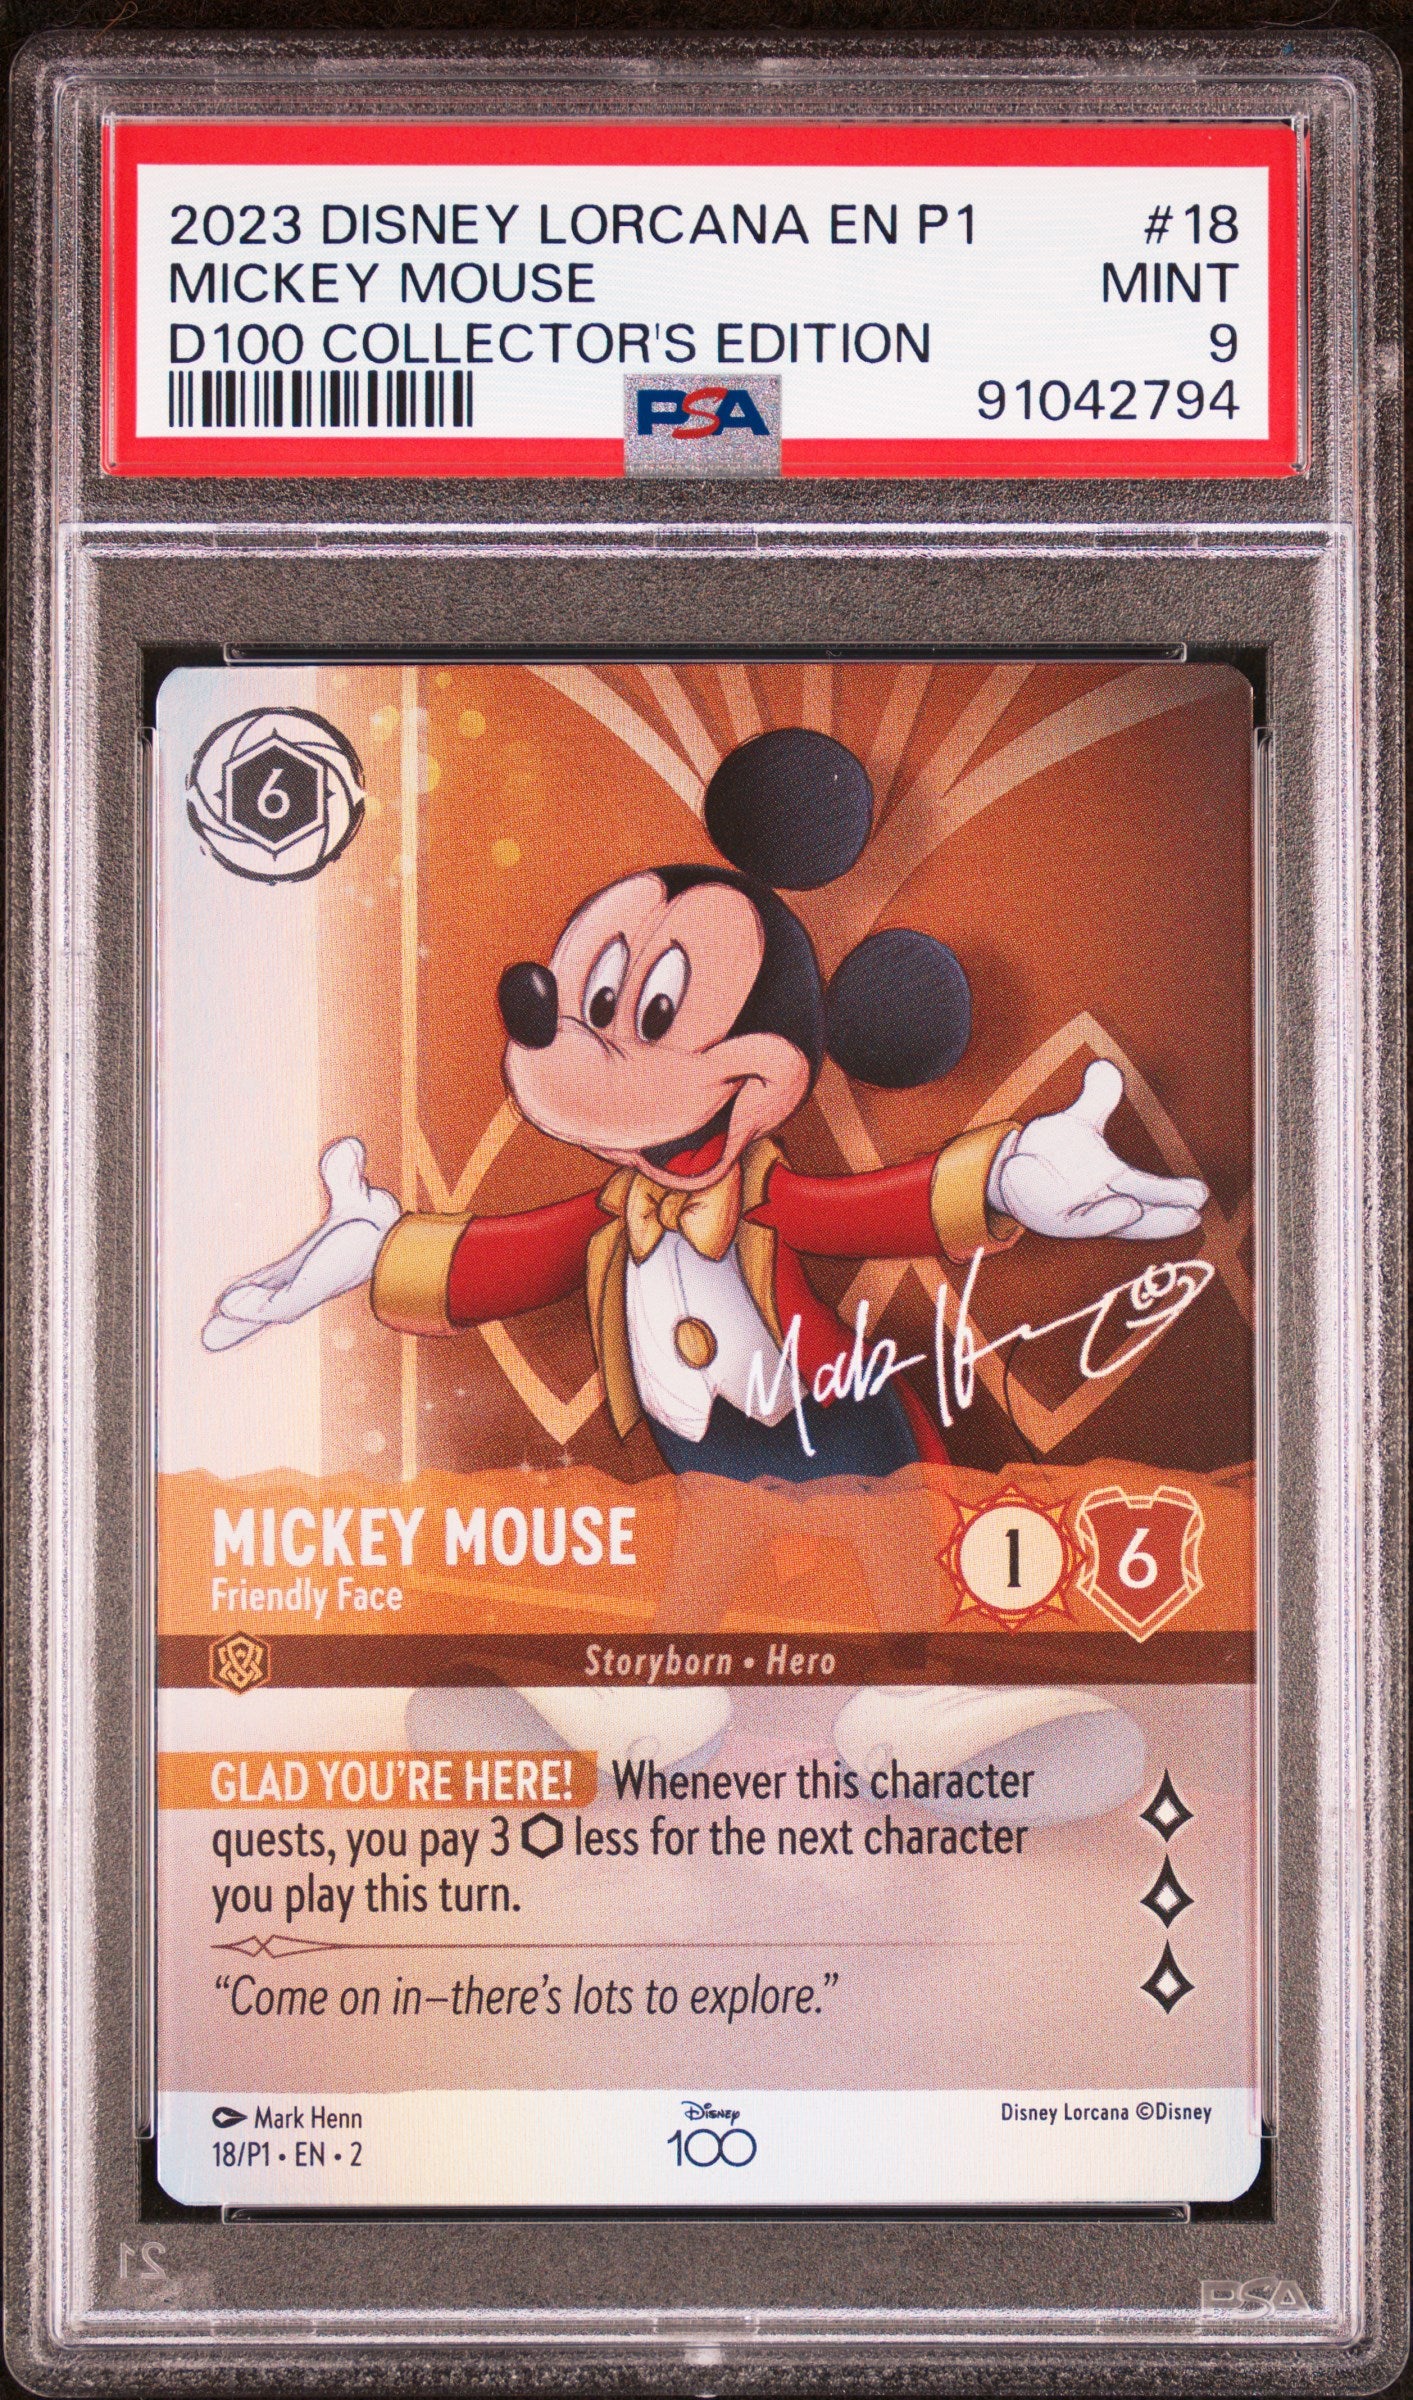 Disney Lorcana - Mickey Mouse 18/P1 (Disney100 Collector's Edition Promo)  - PSA 9 (MINT)